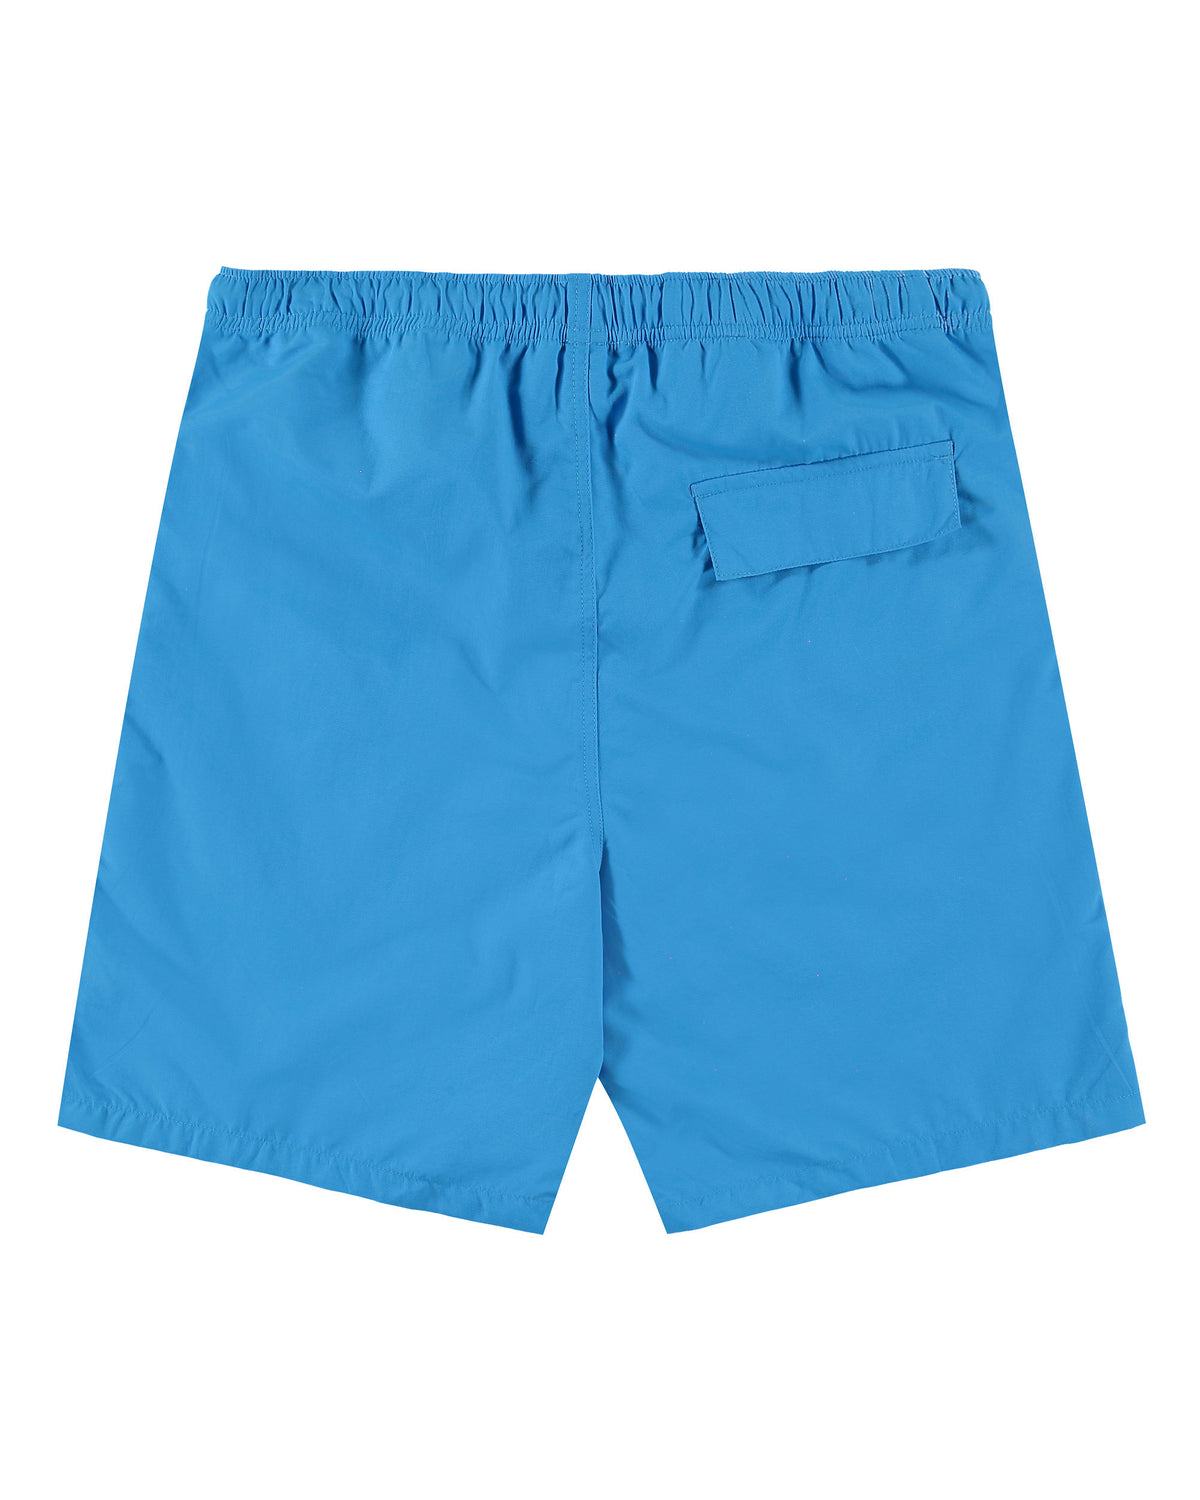 Burnout Trail Shorts - Blue - Body Glove